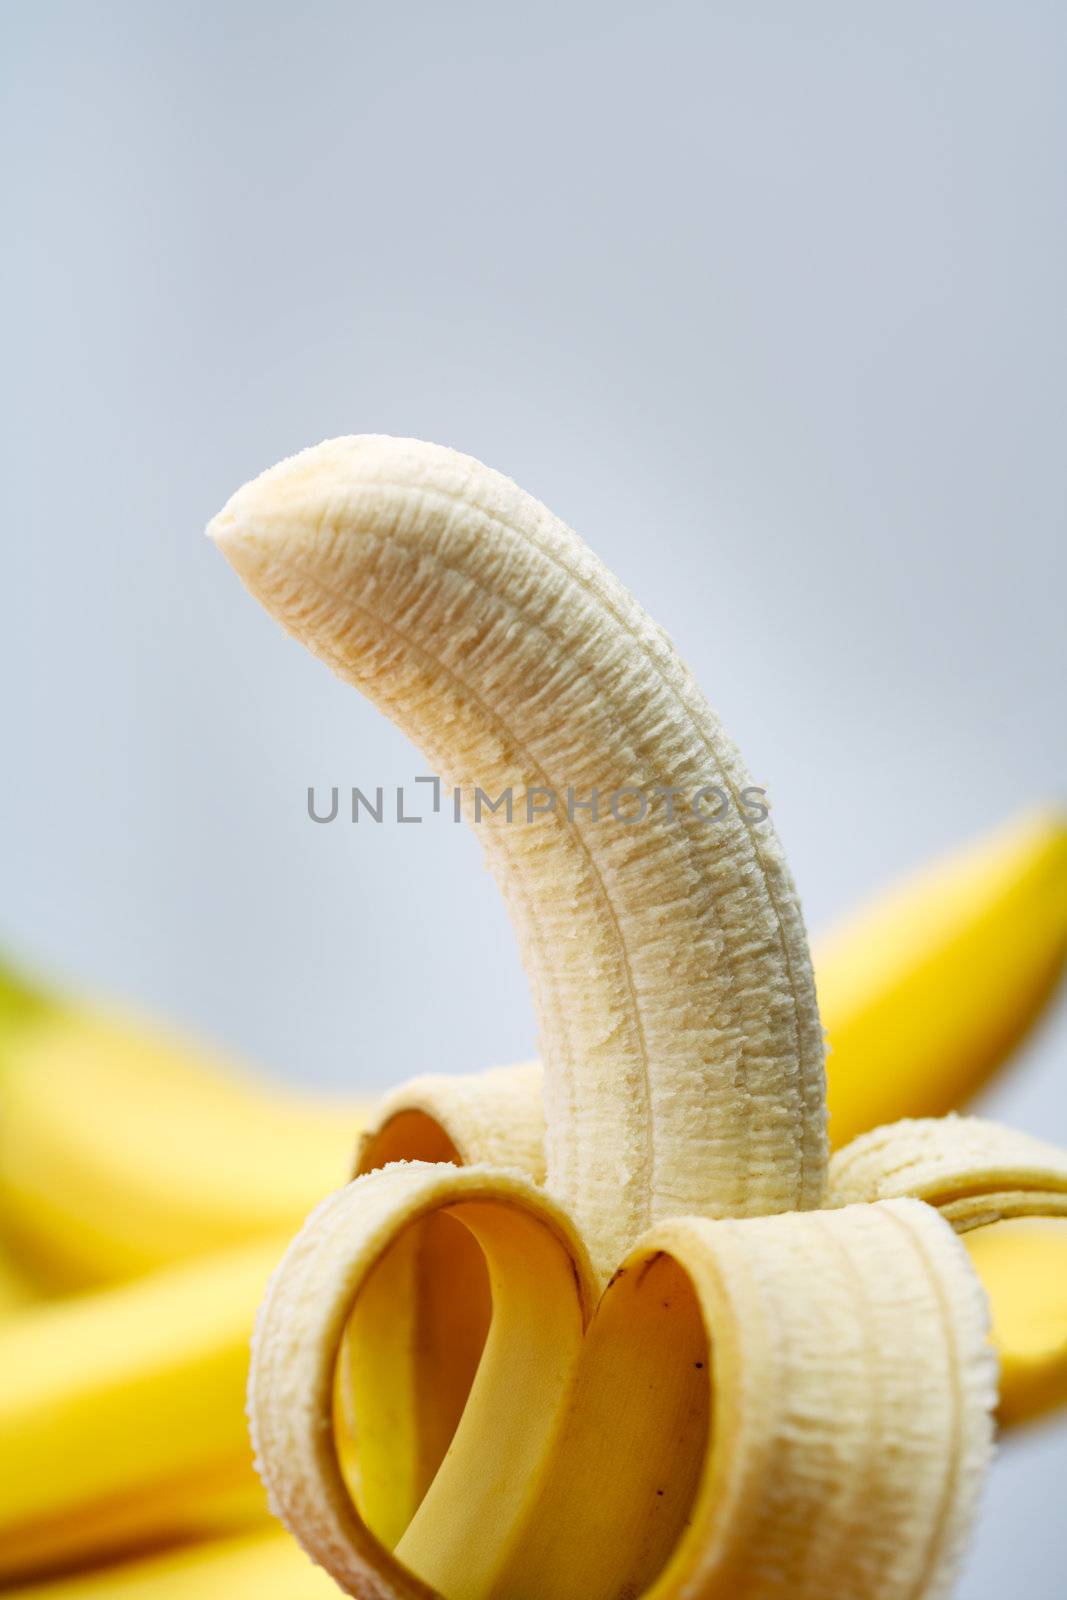 Banana by Stocksnapper